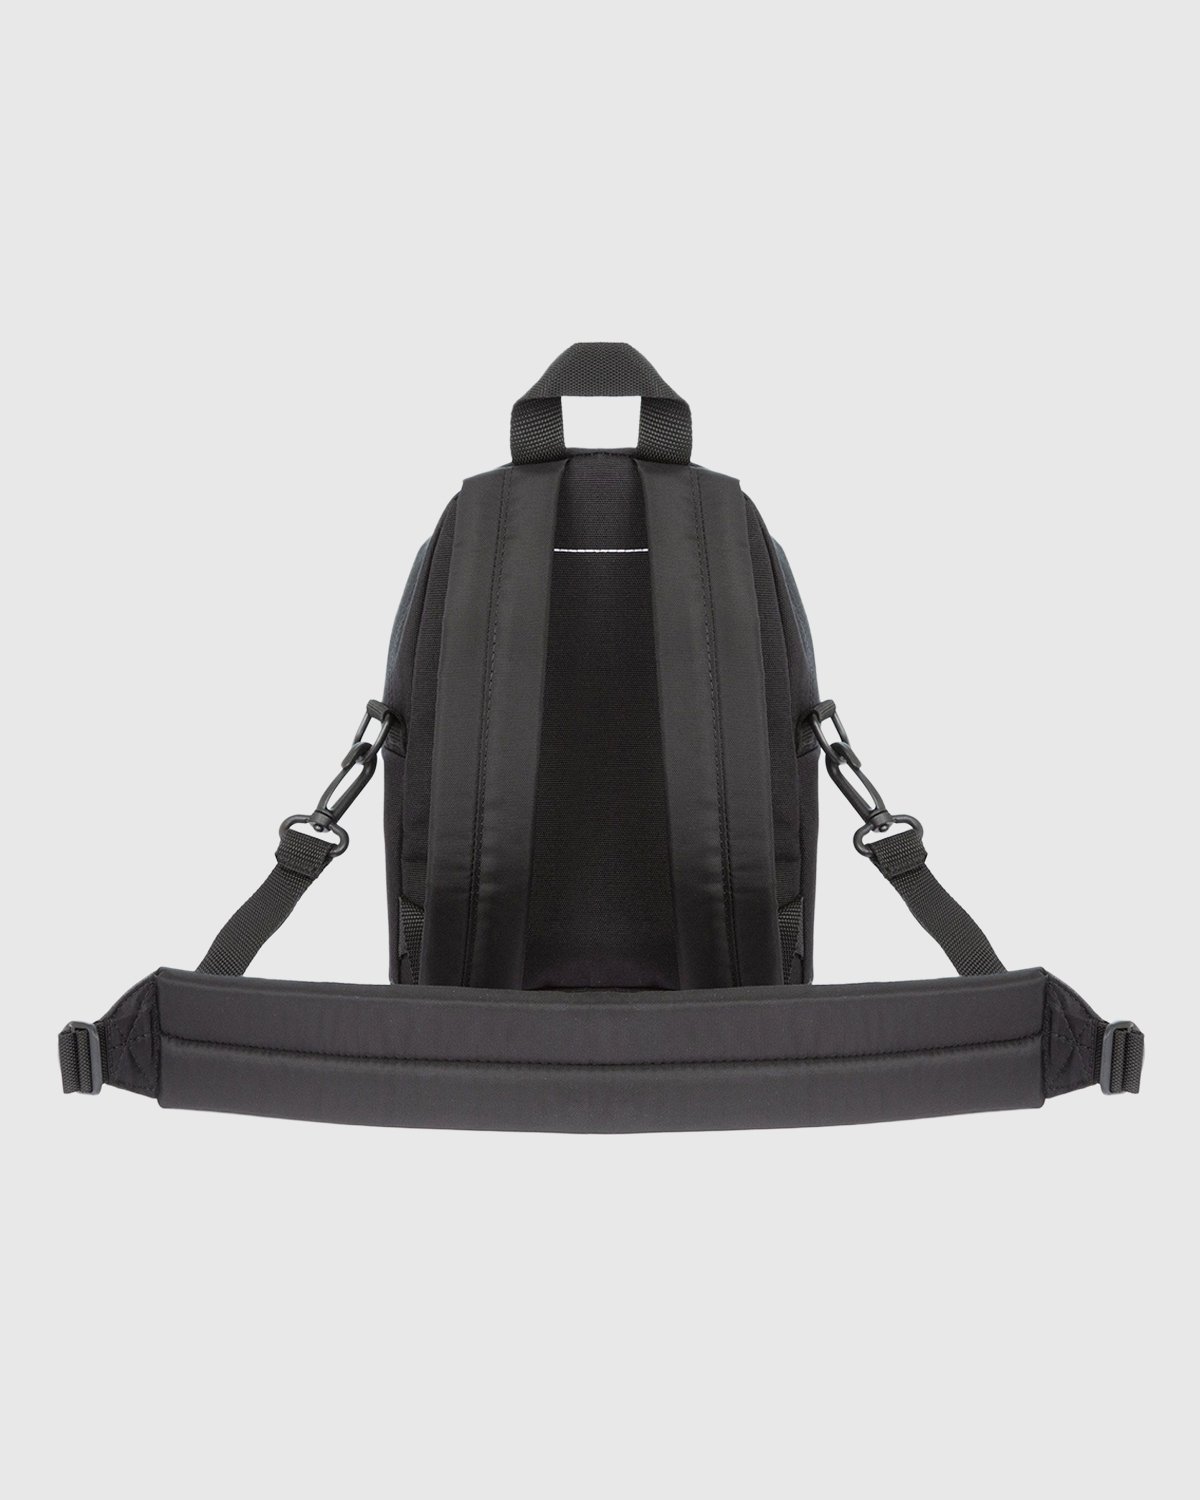 MM6 Maison Margiela x Eastpak - Shoulder Bag Black - Accessories - Black - Image 4